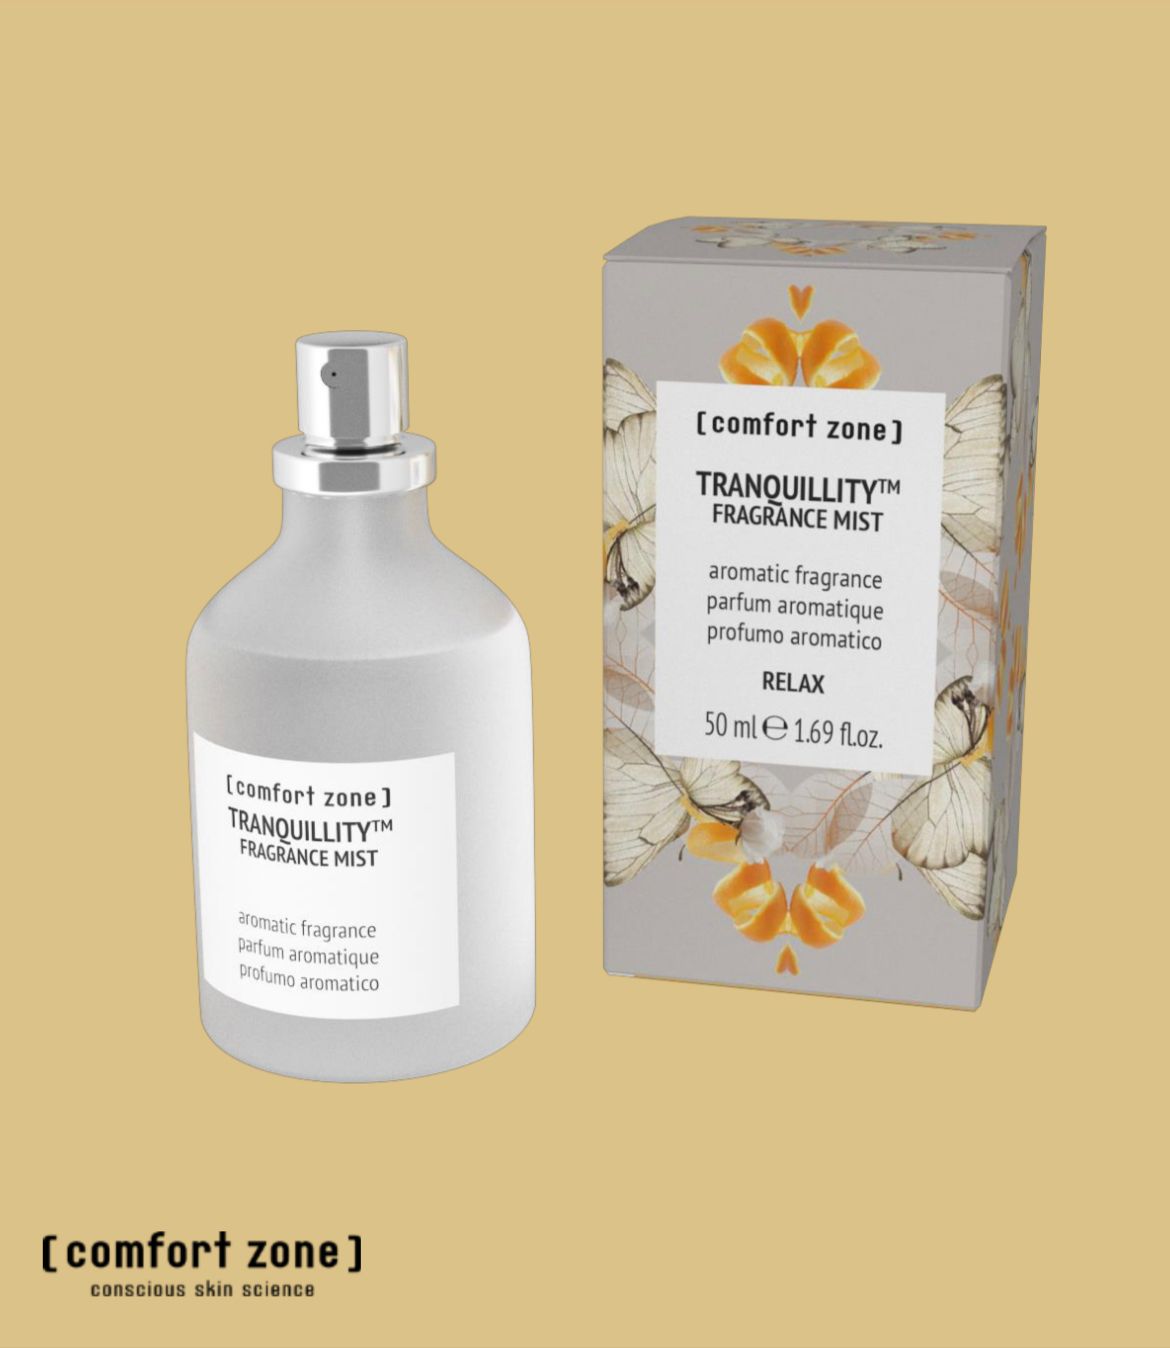 Tranquillity fragrance mist- romspray